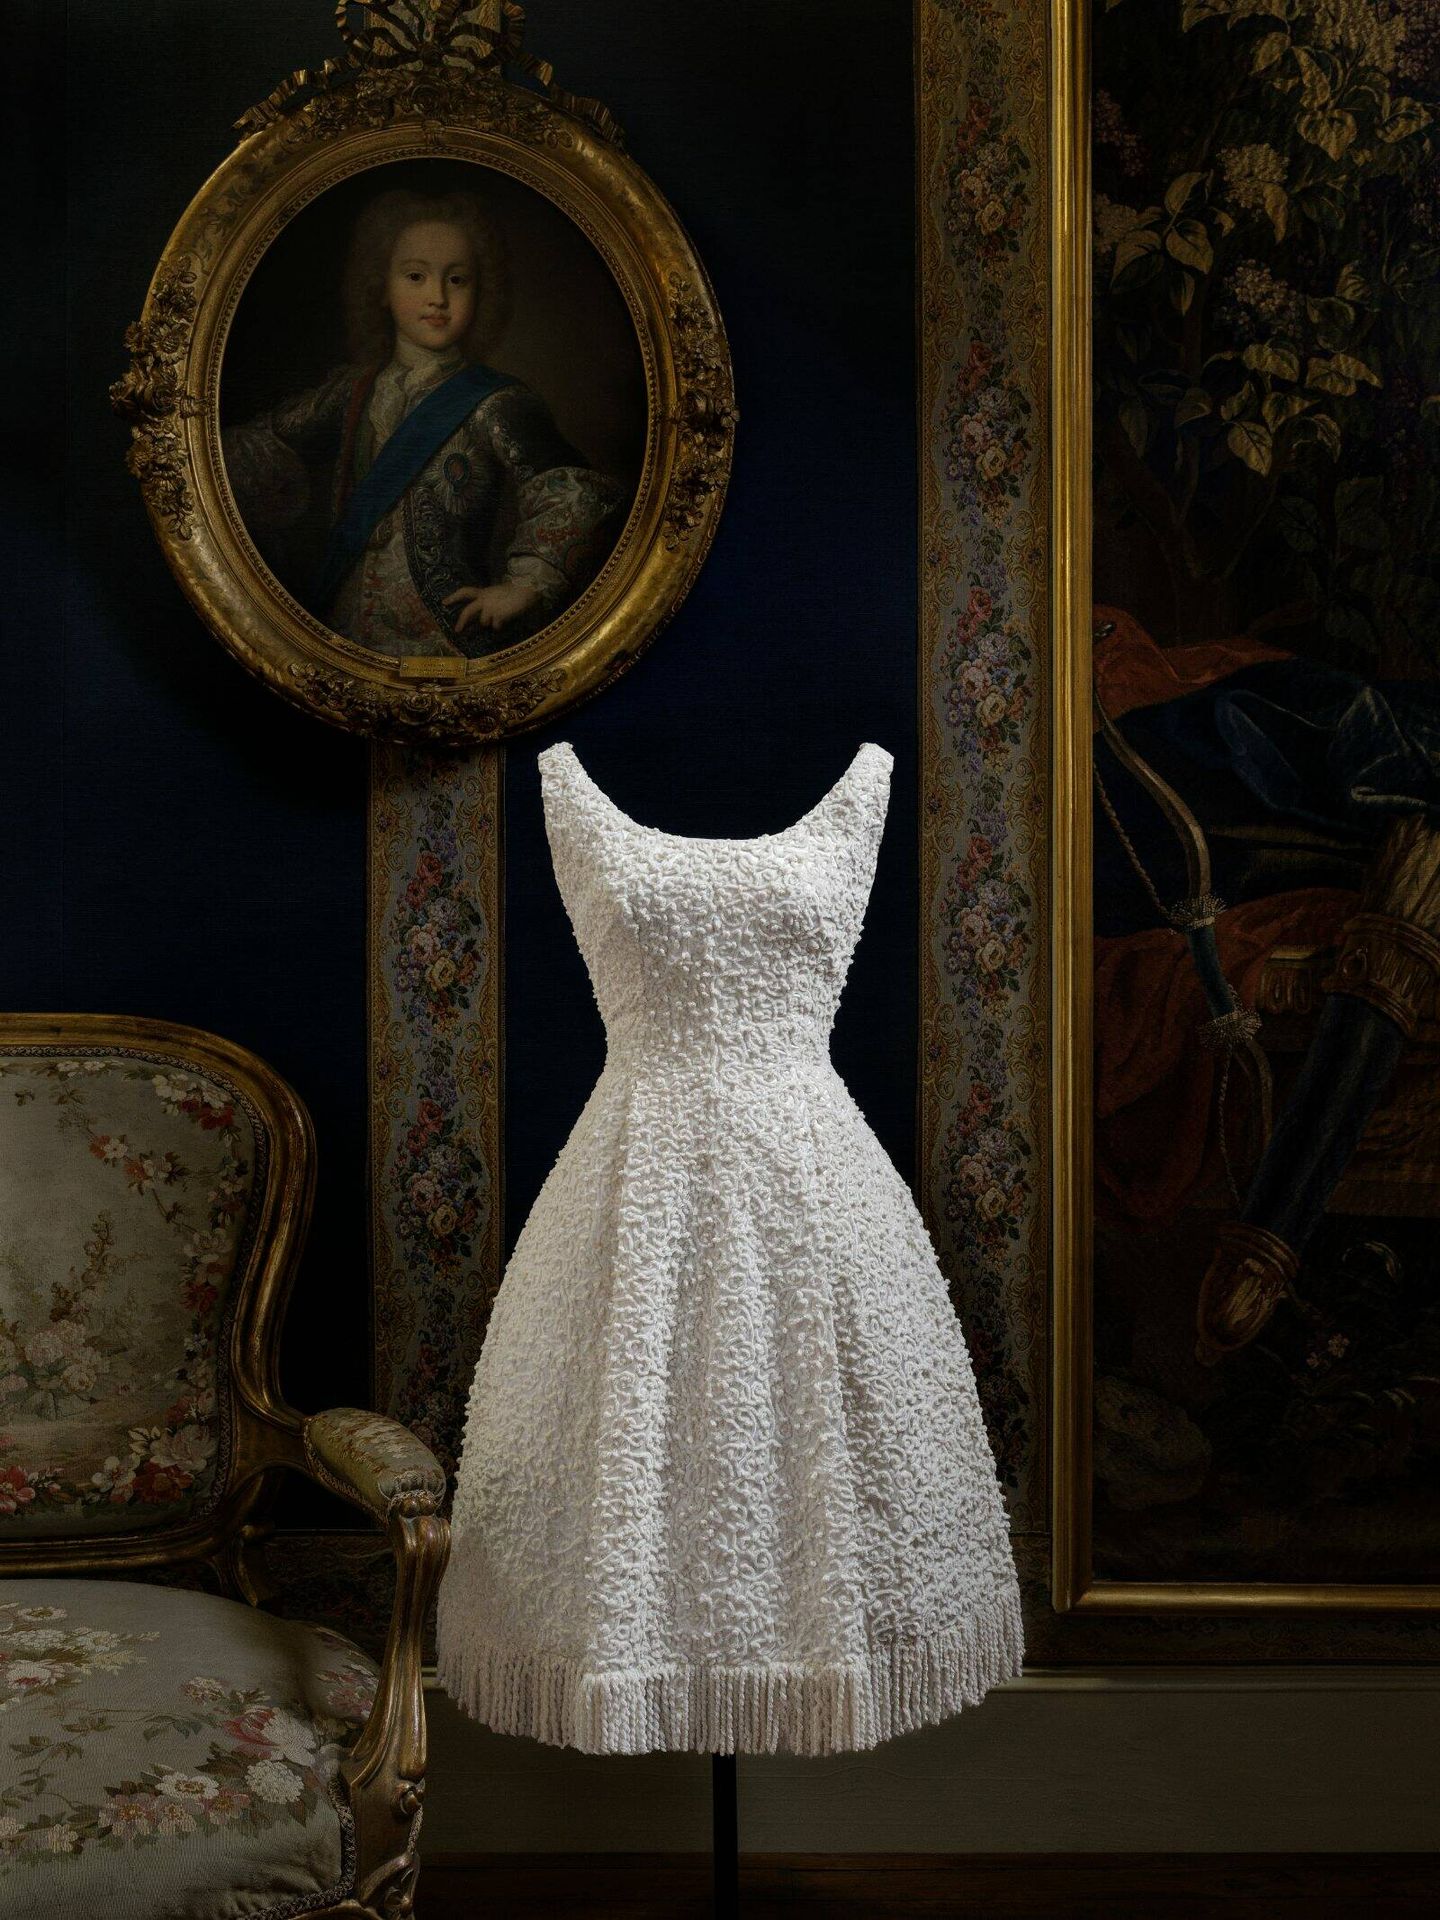 Vestido de cóctel de Cayetana Fitz-James Stuart, XVIII duquesa de Alba, diseñado por Manuel Pertegaz. (Cortesía)